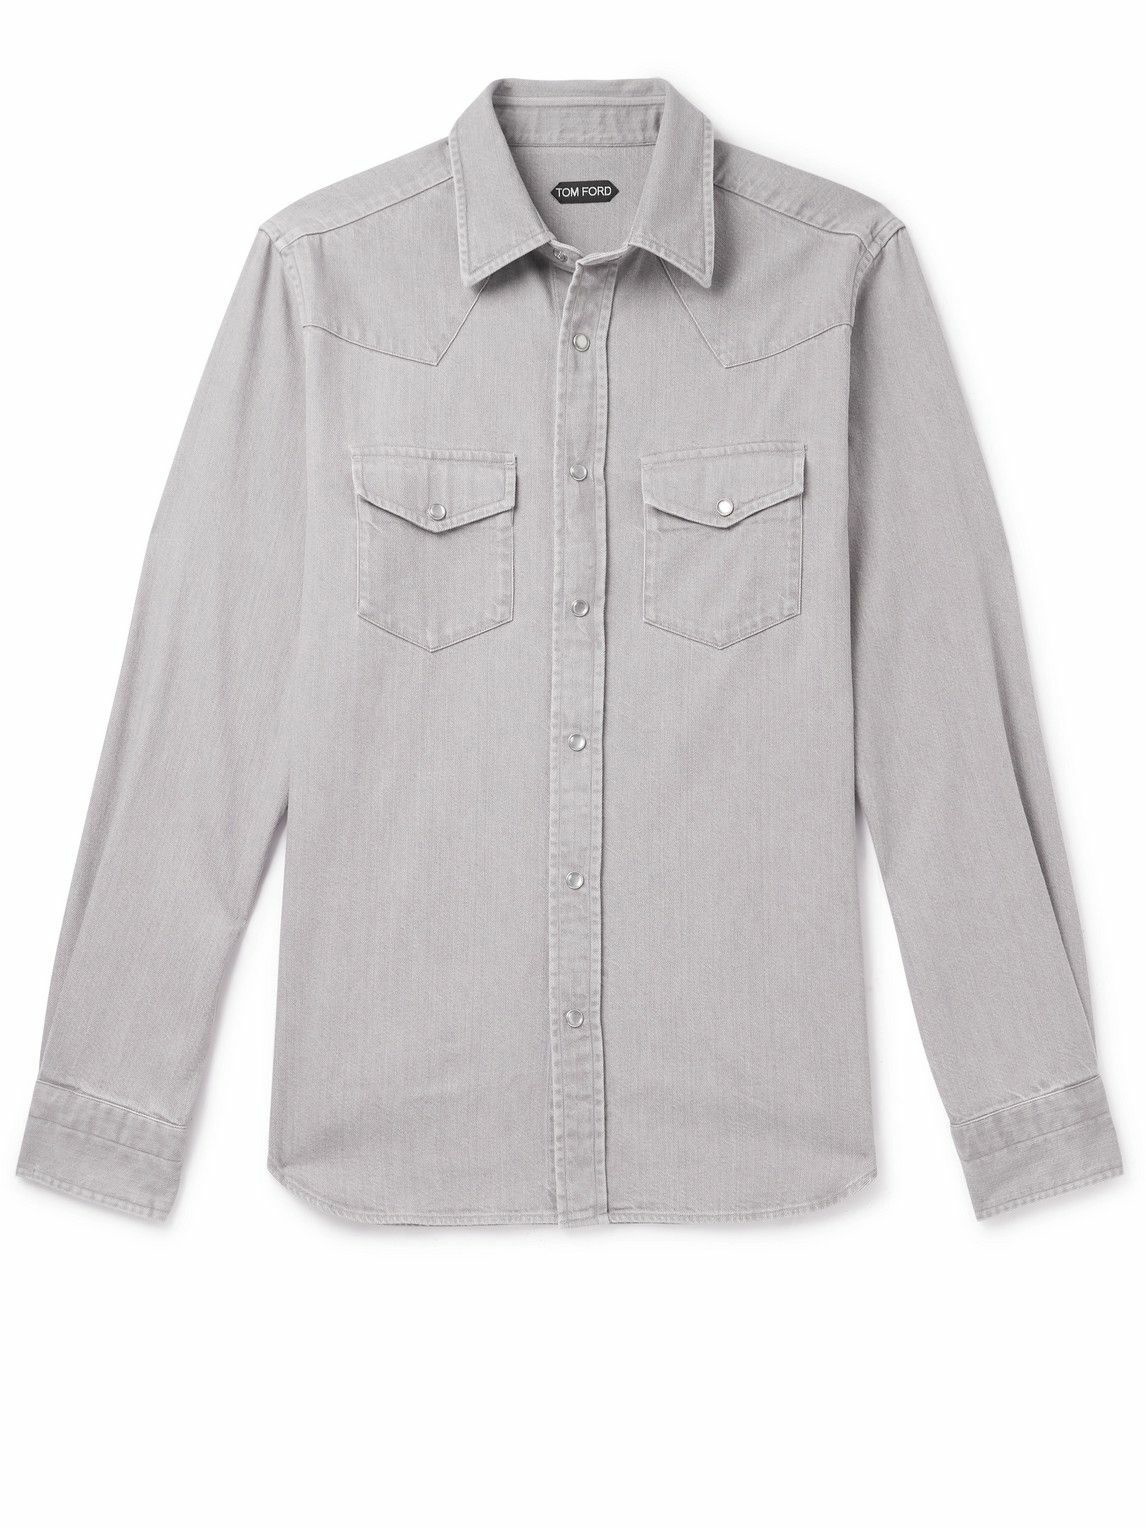 TOM FORD - Denim Western Shirt - Gray TOM FORD